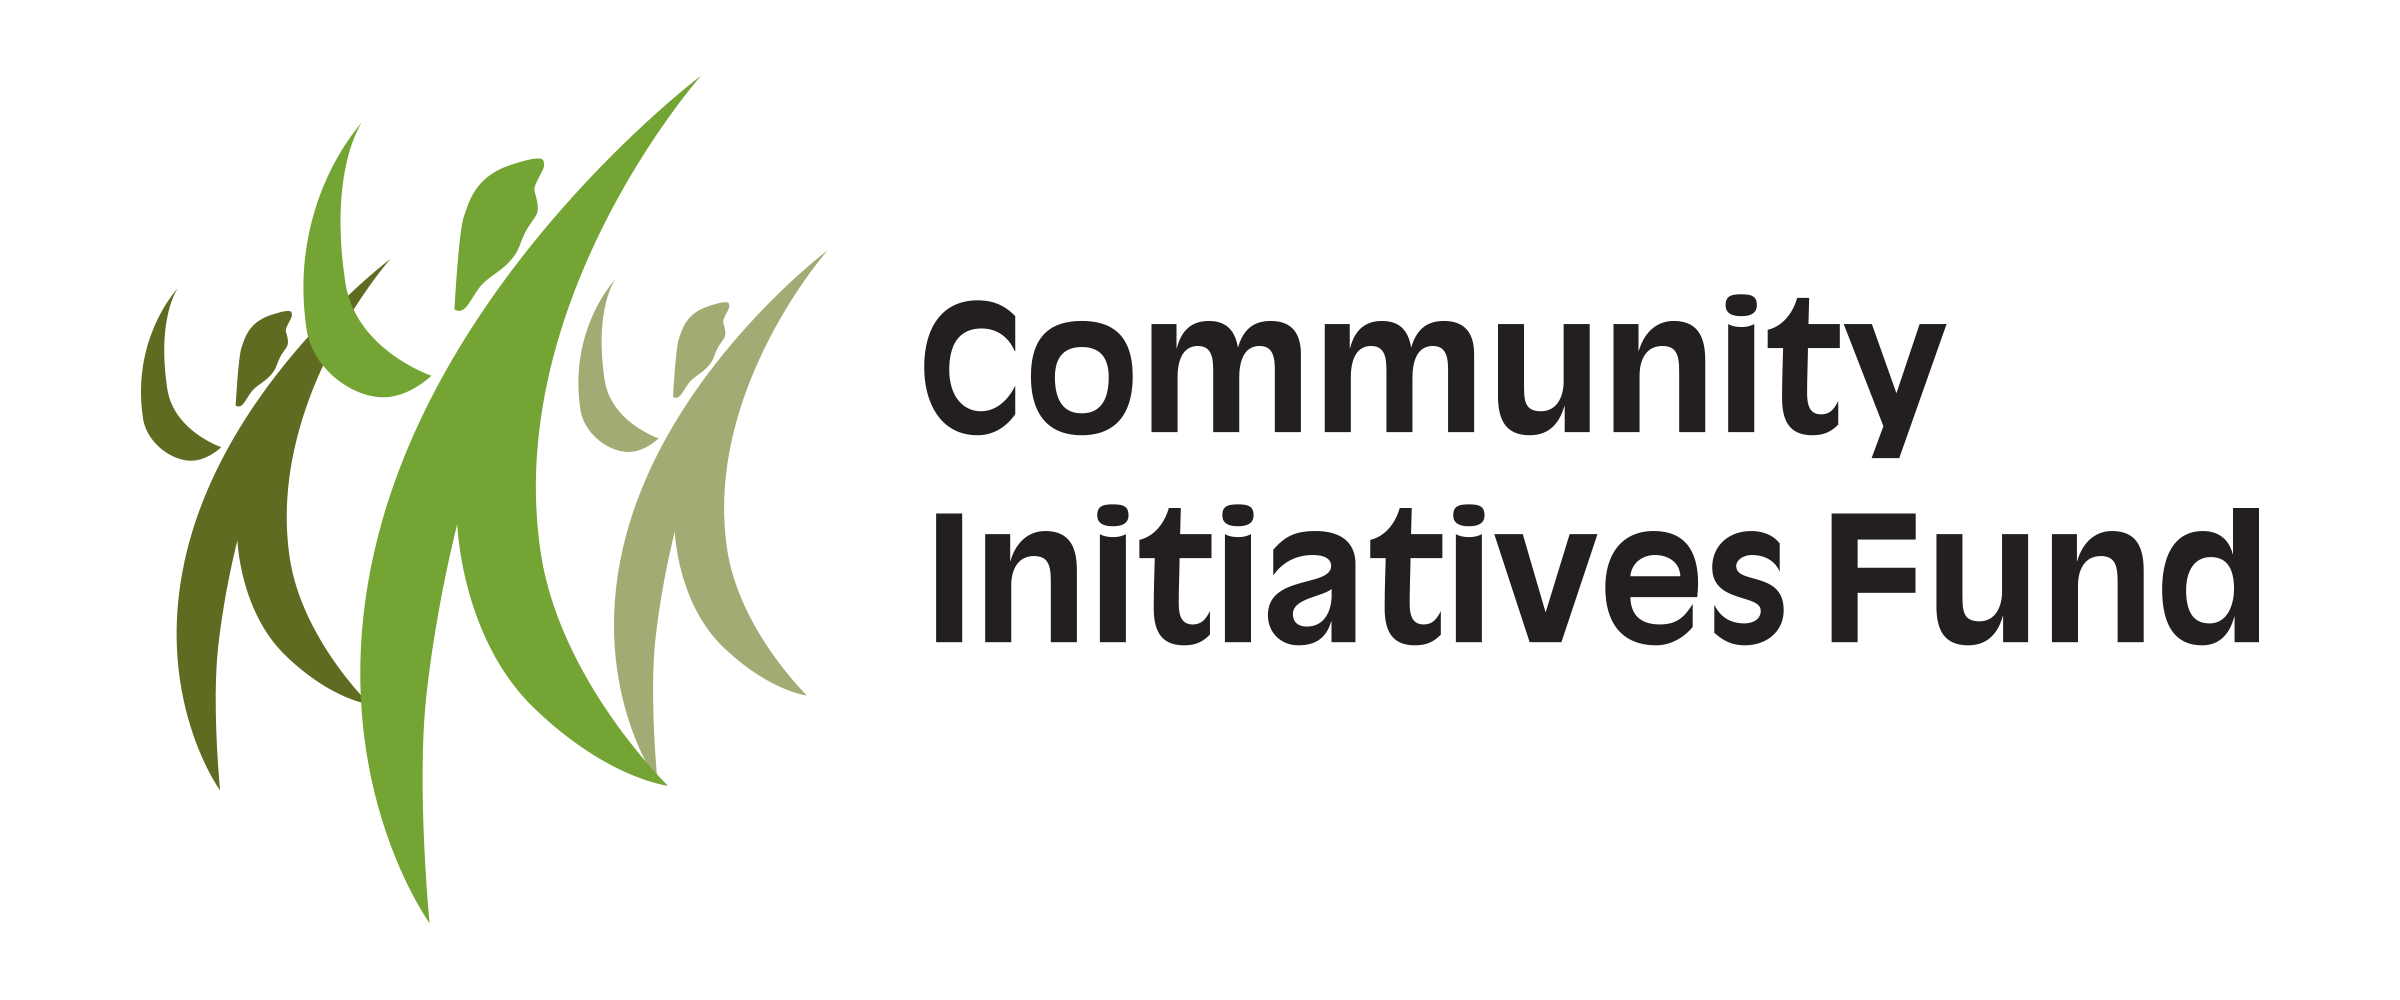 Community Initiatives Fund colour logo horizontal